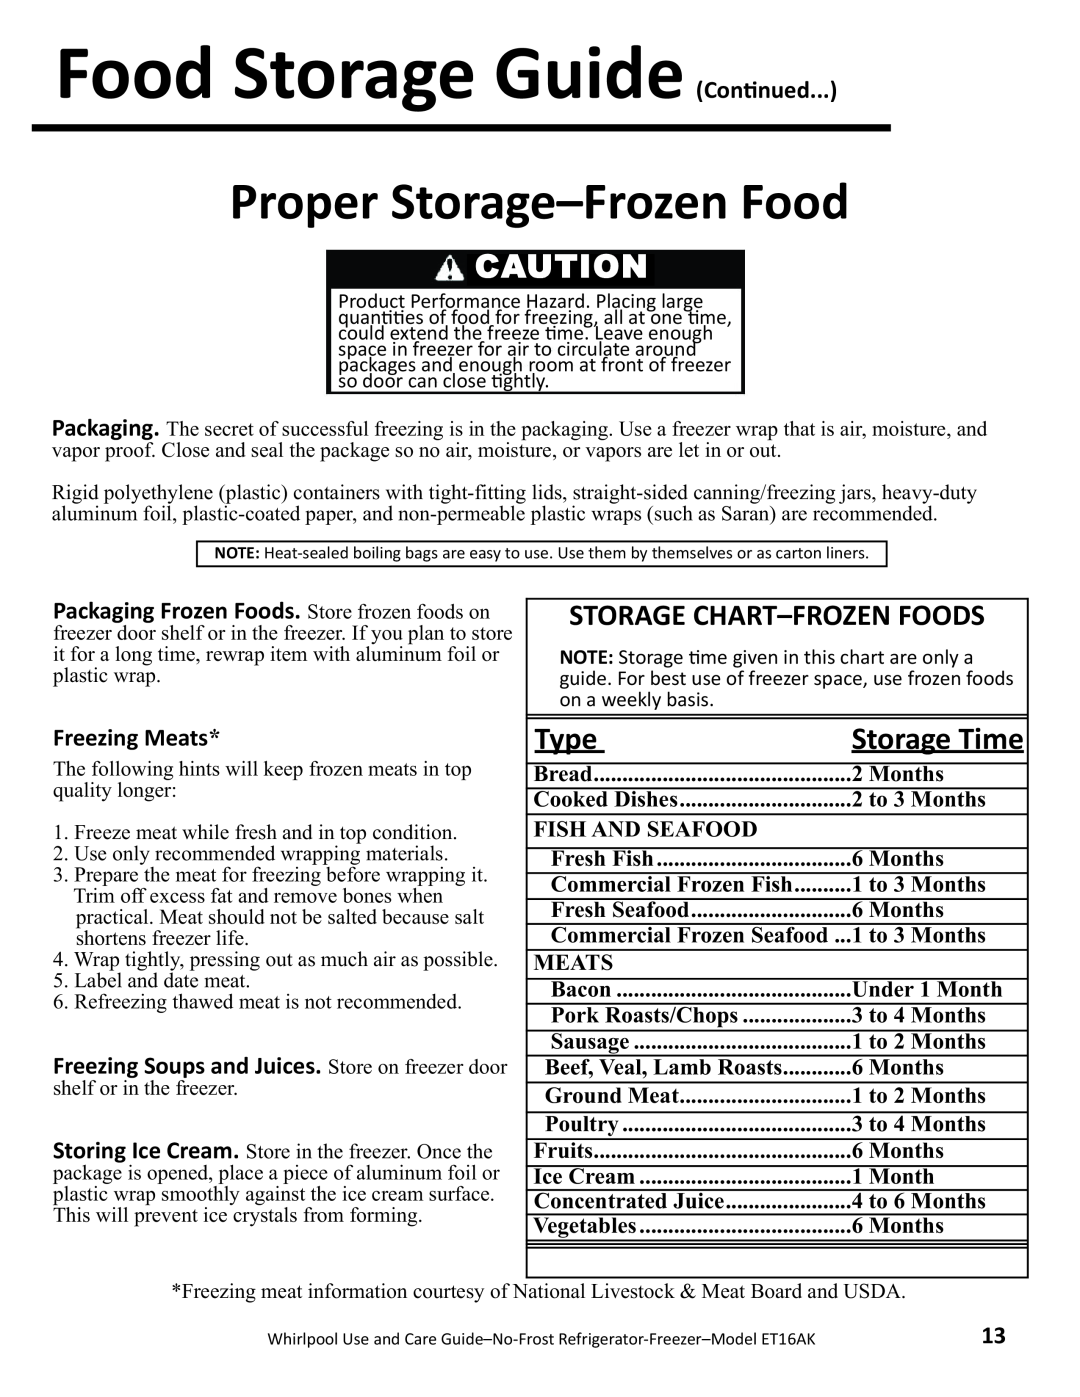 Whirlpool ET16AK Food Storage Guide Con/nued, Proper Storage-FrozenFood, Type, Storage Time, Storage Chart-Frozenfoods 